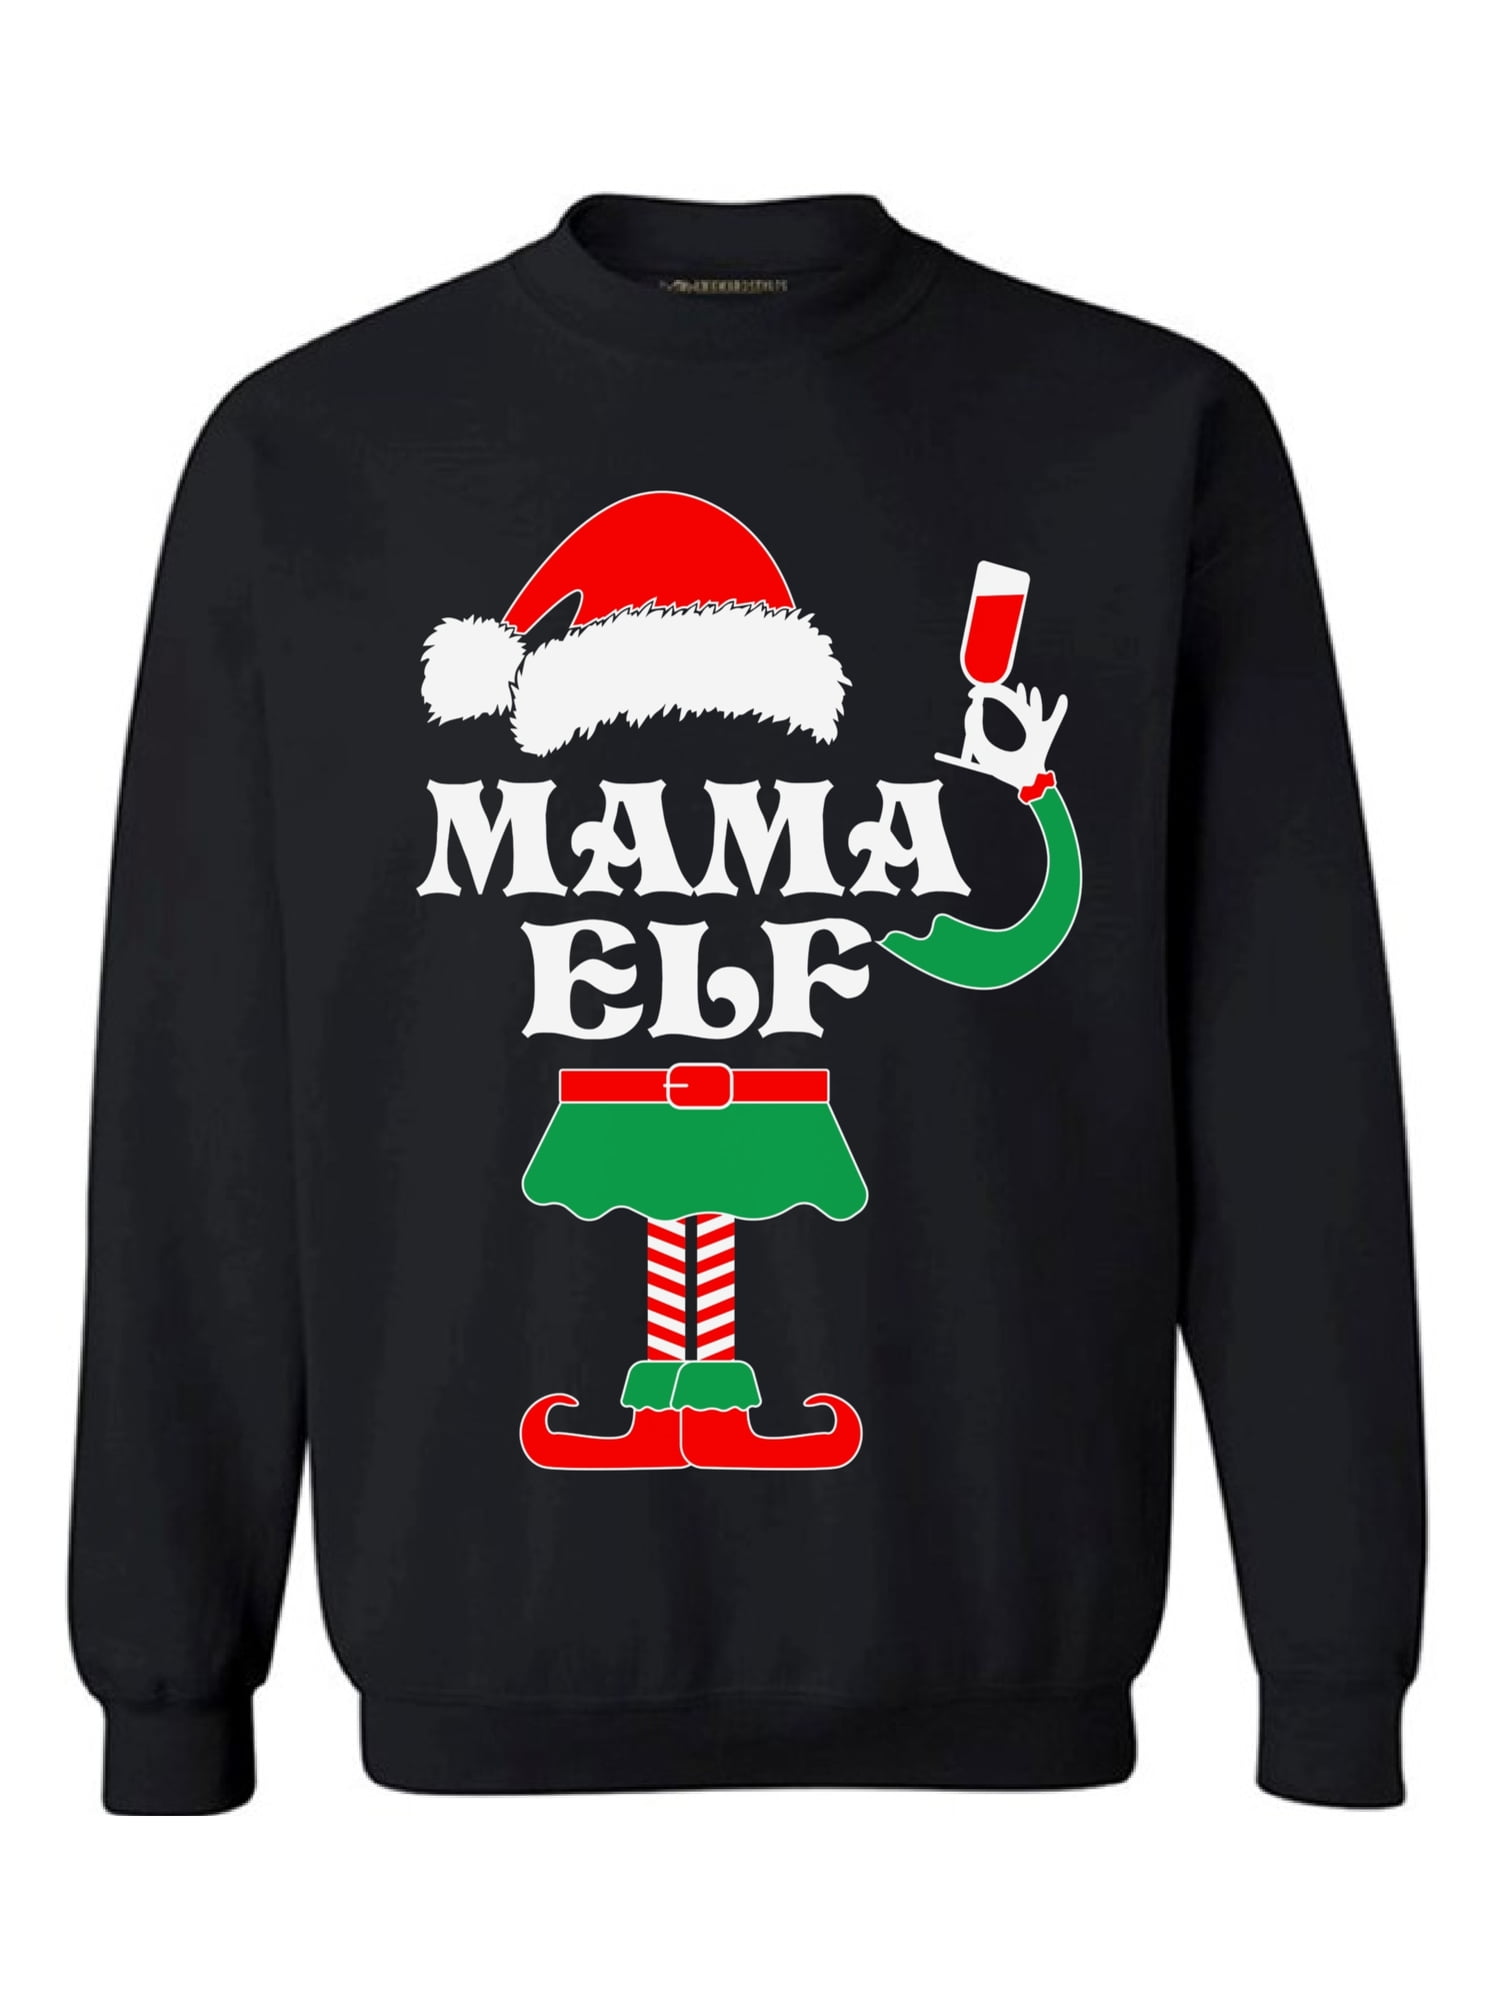 Funny Novelty Sweatshirt Jumper Top Elf Mummy